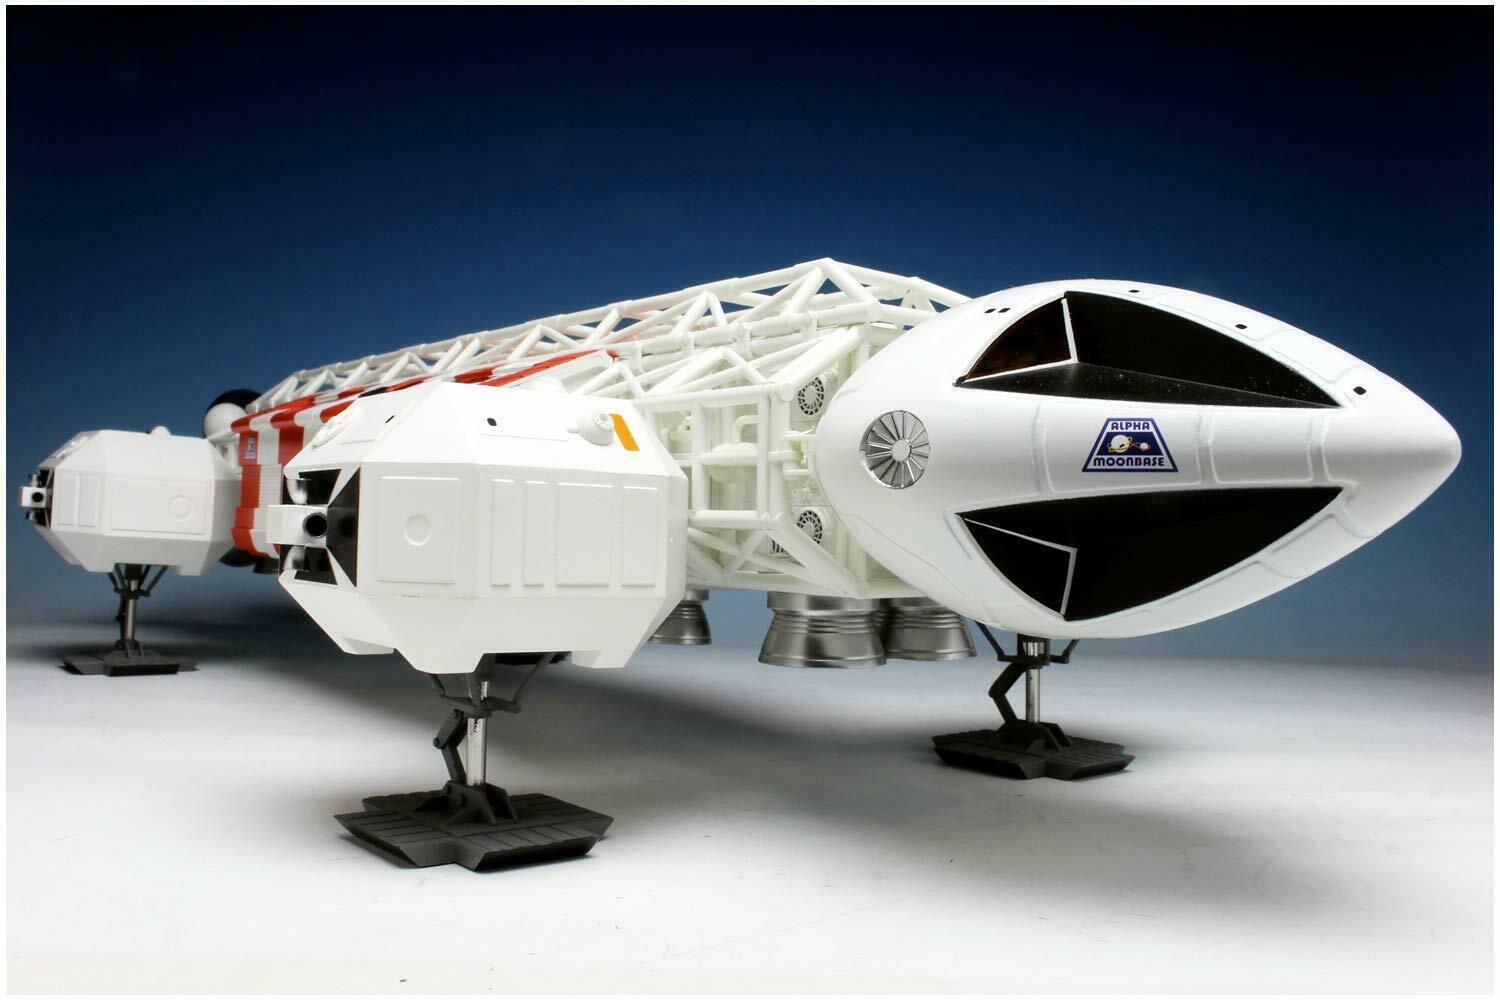 space 1999 eagle model kit